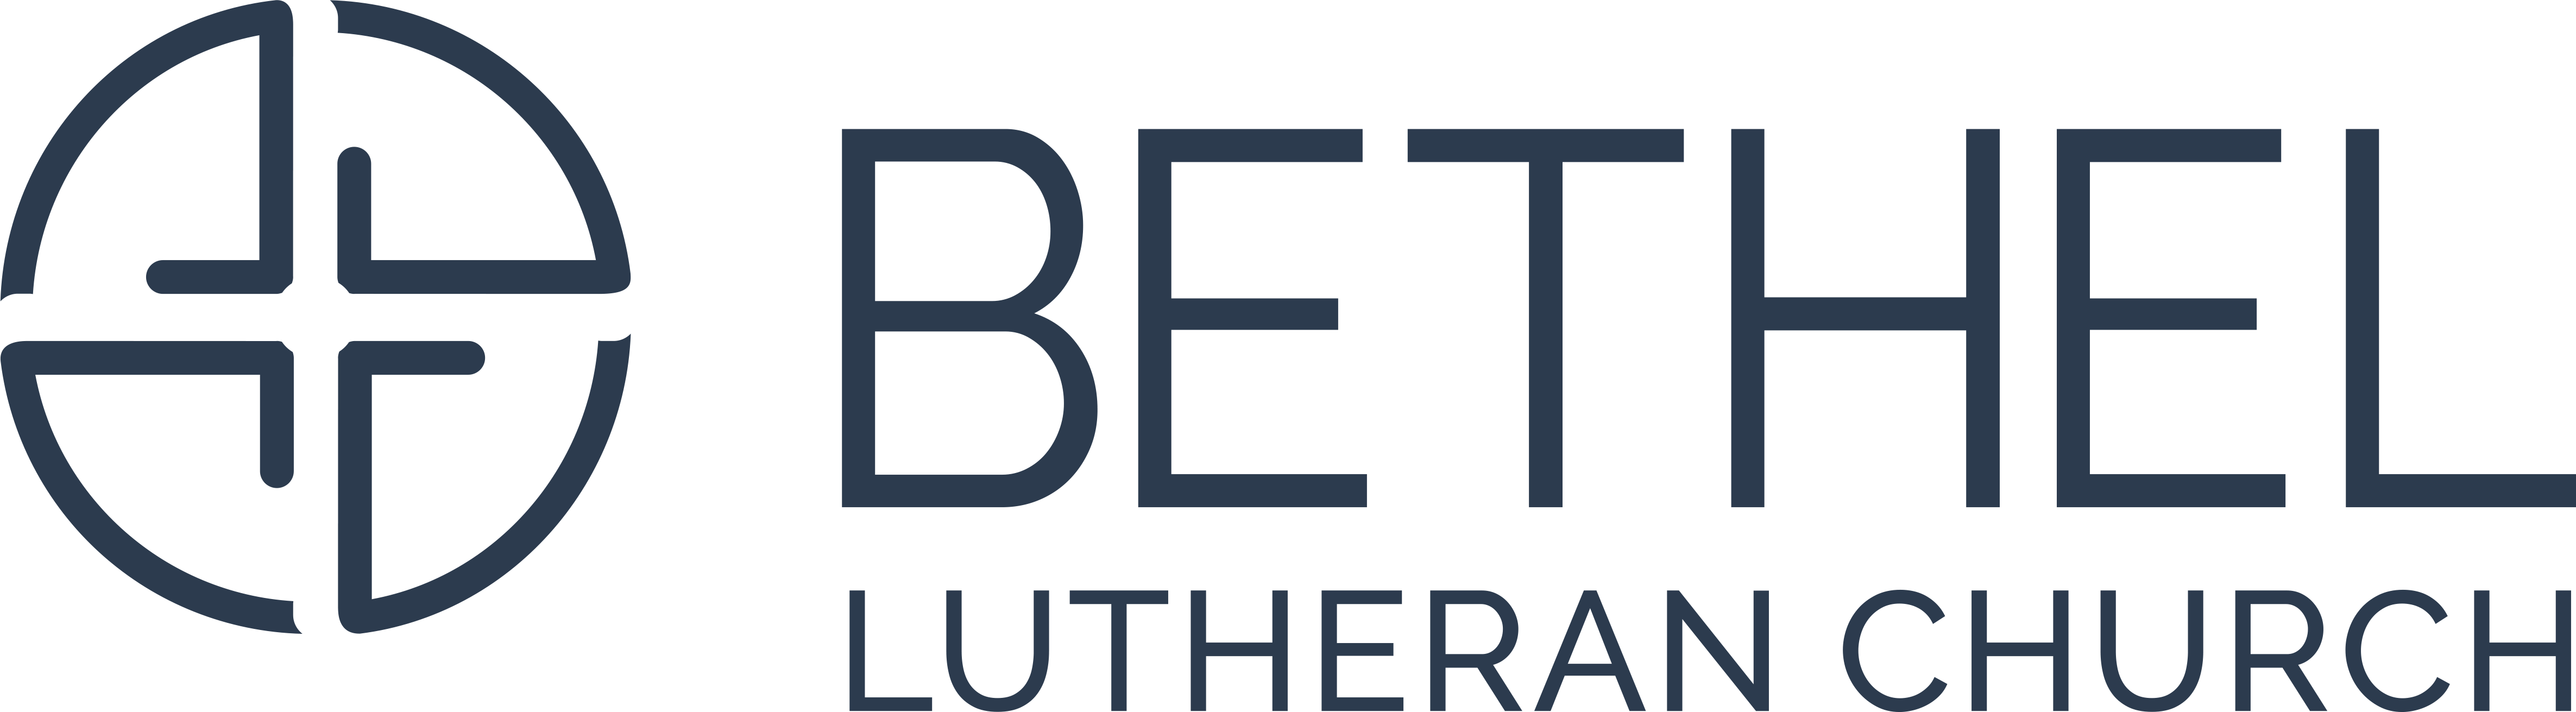 bethel logo horizontal navy print vector